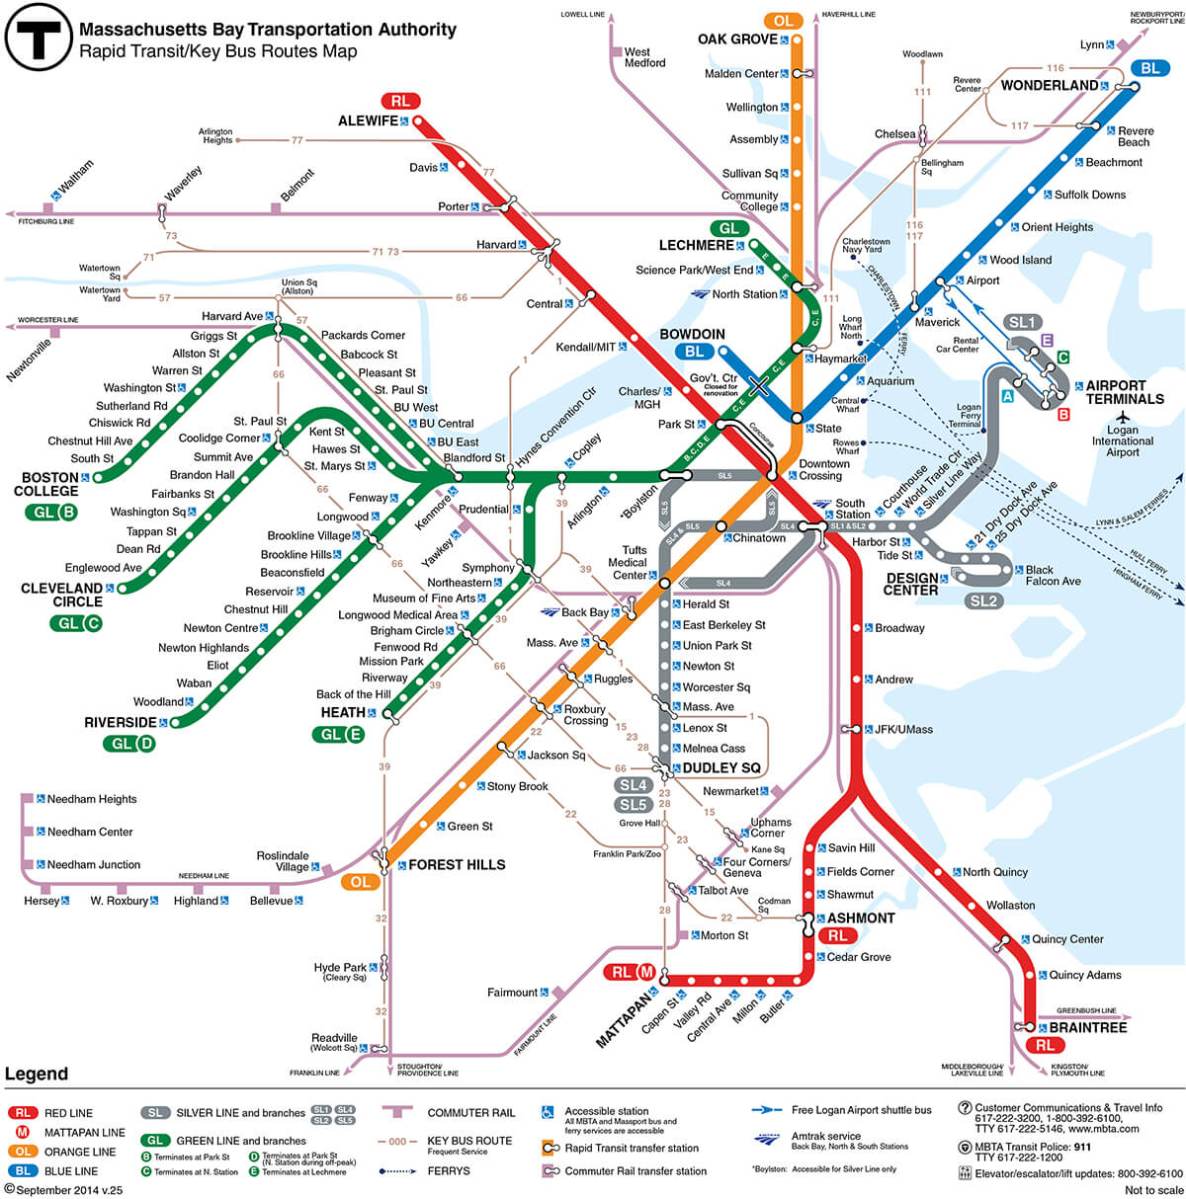 UPDATE: Red Line service resumes between JFK and N. Quincy